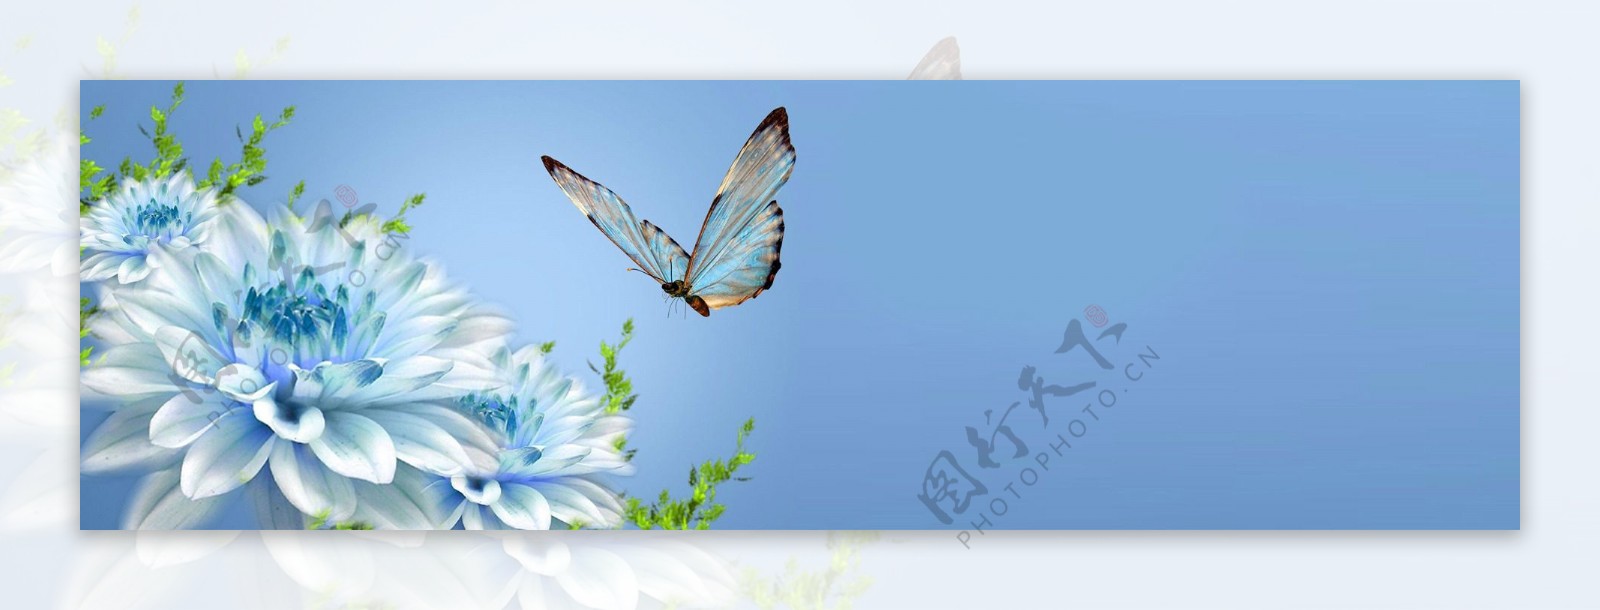 鲜花与蝴蝶banner背景图